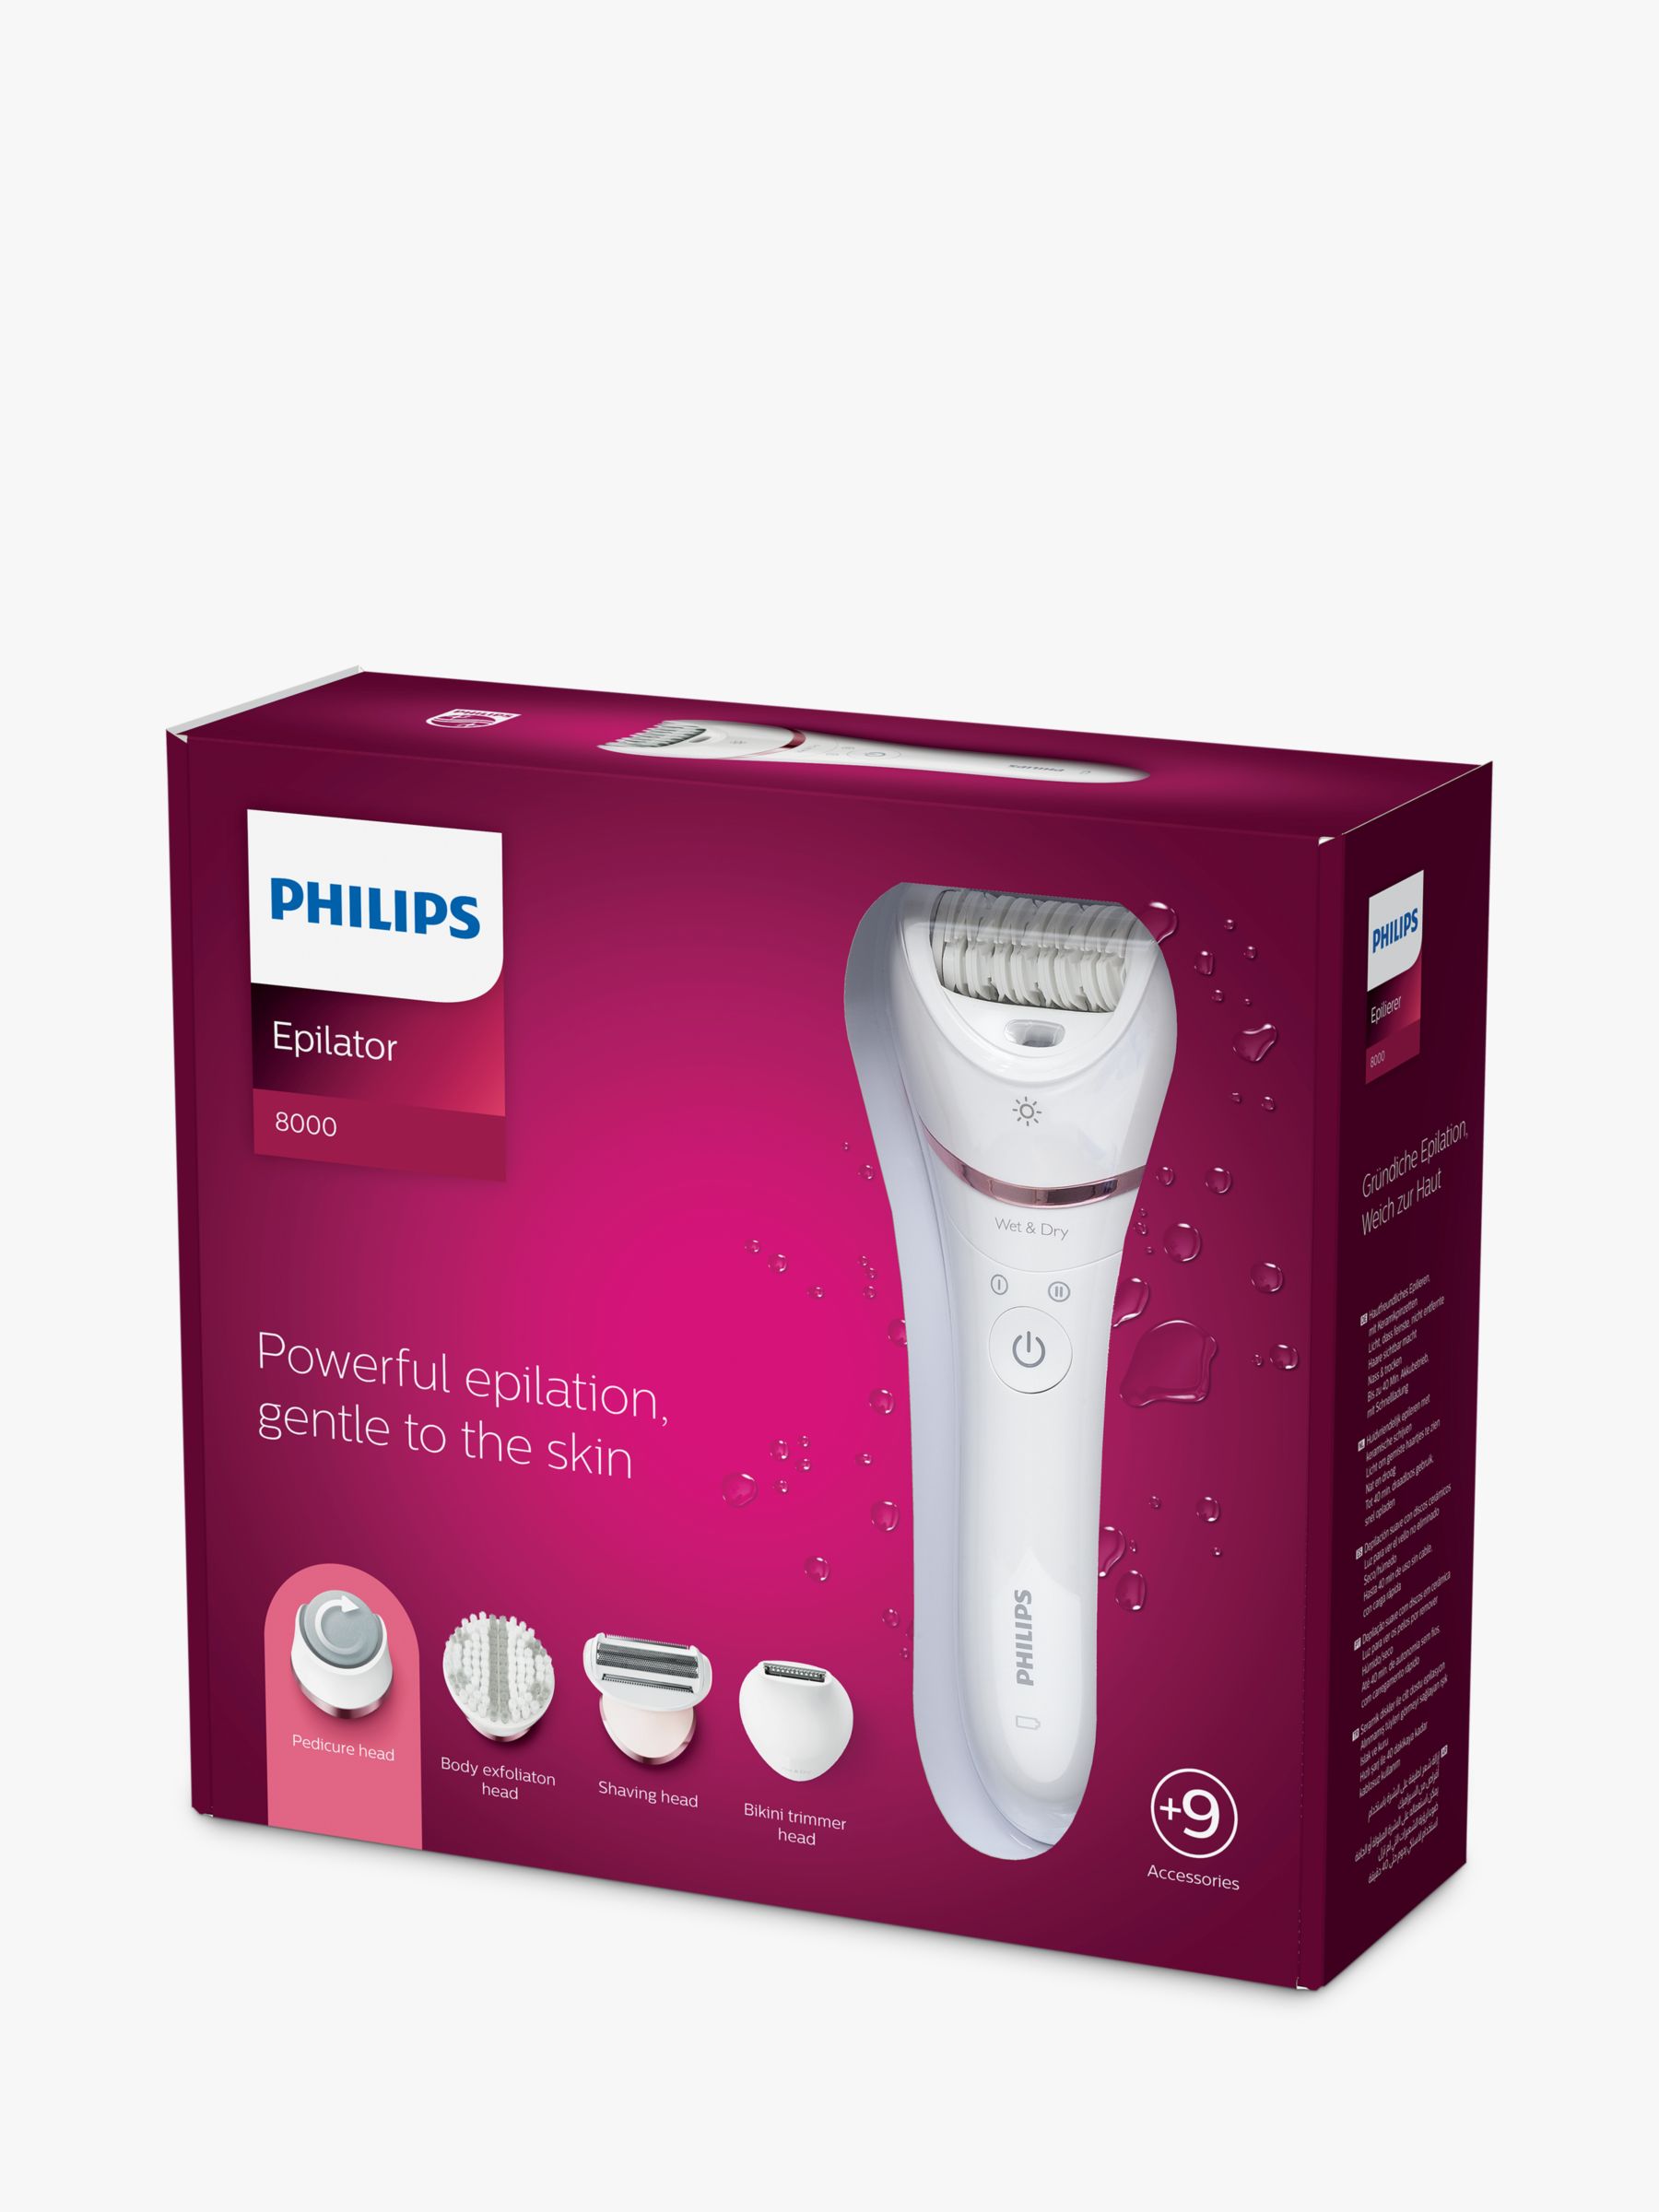  Philips Beauty Epilator Series 8000 5 in 1 Shaver for